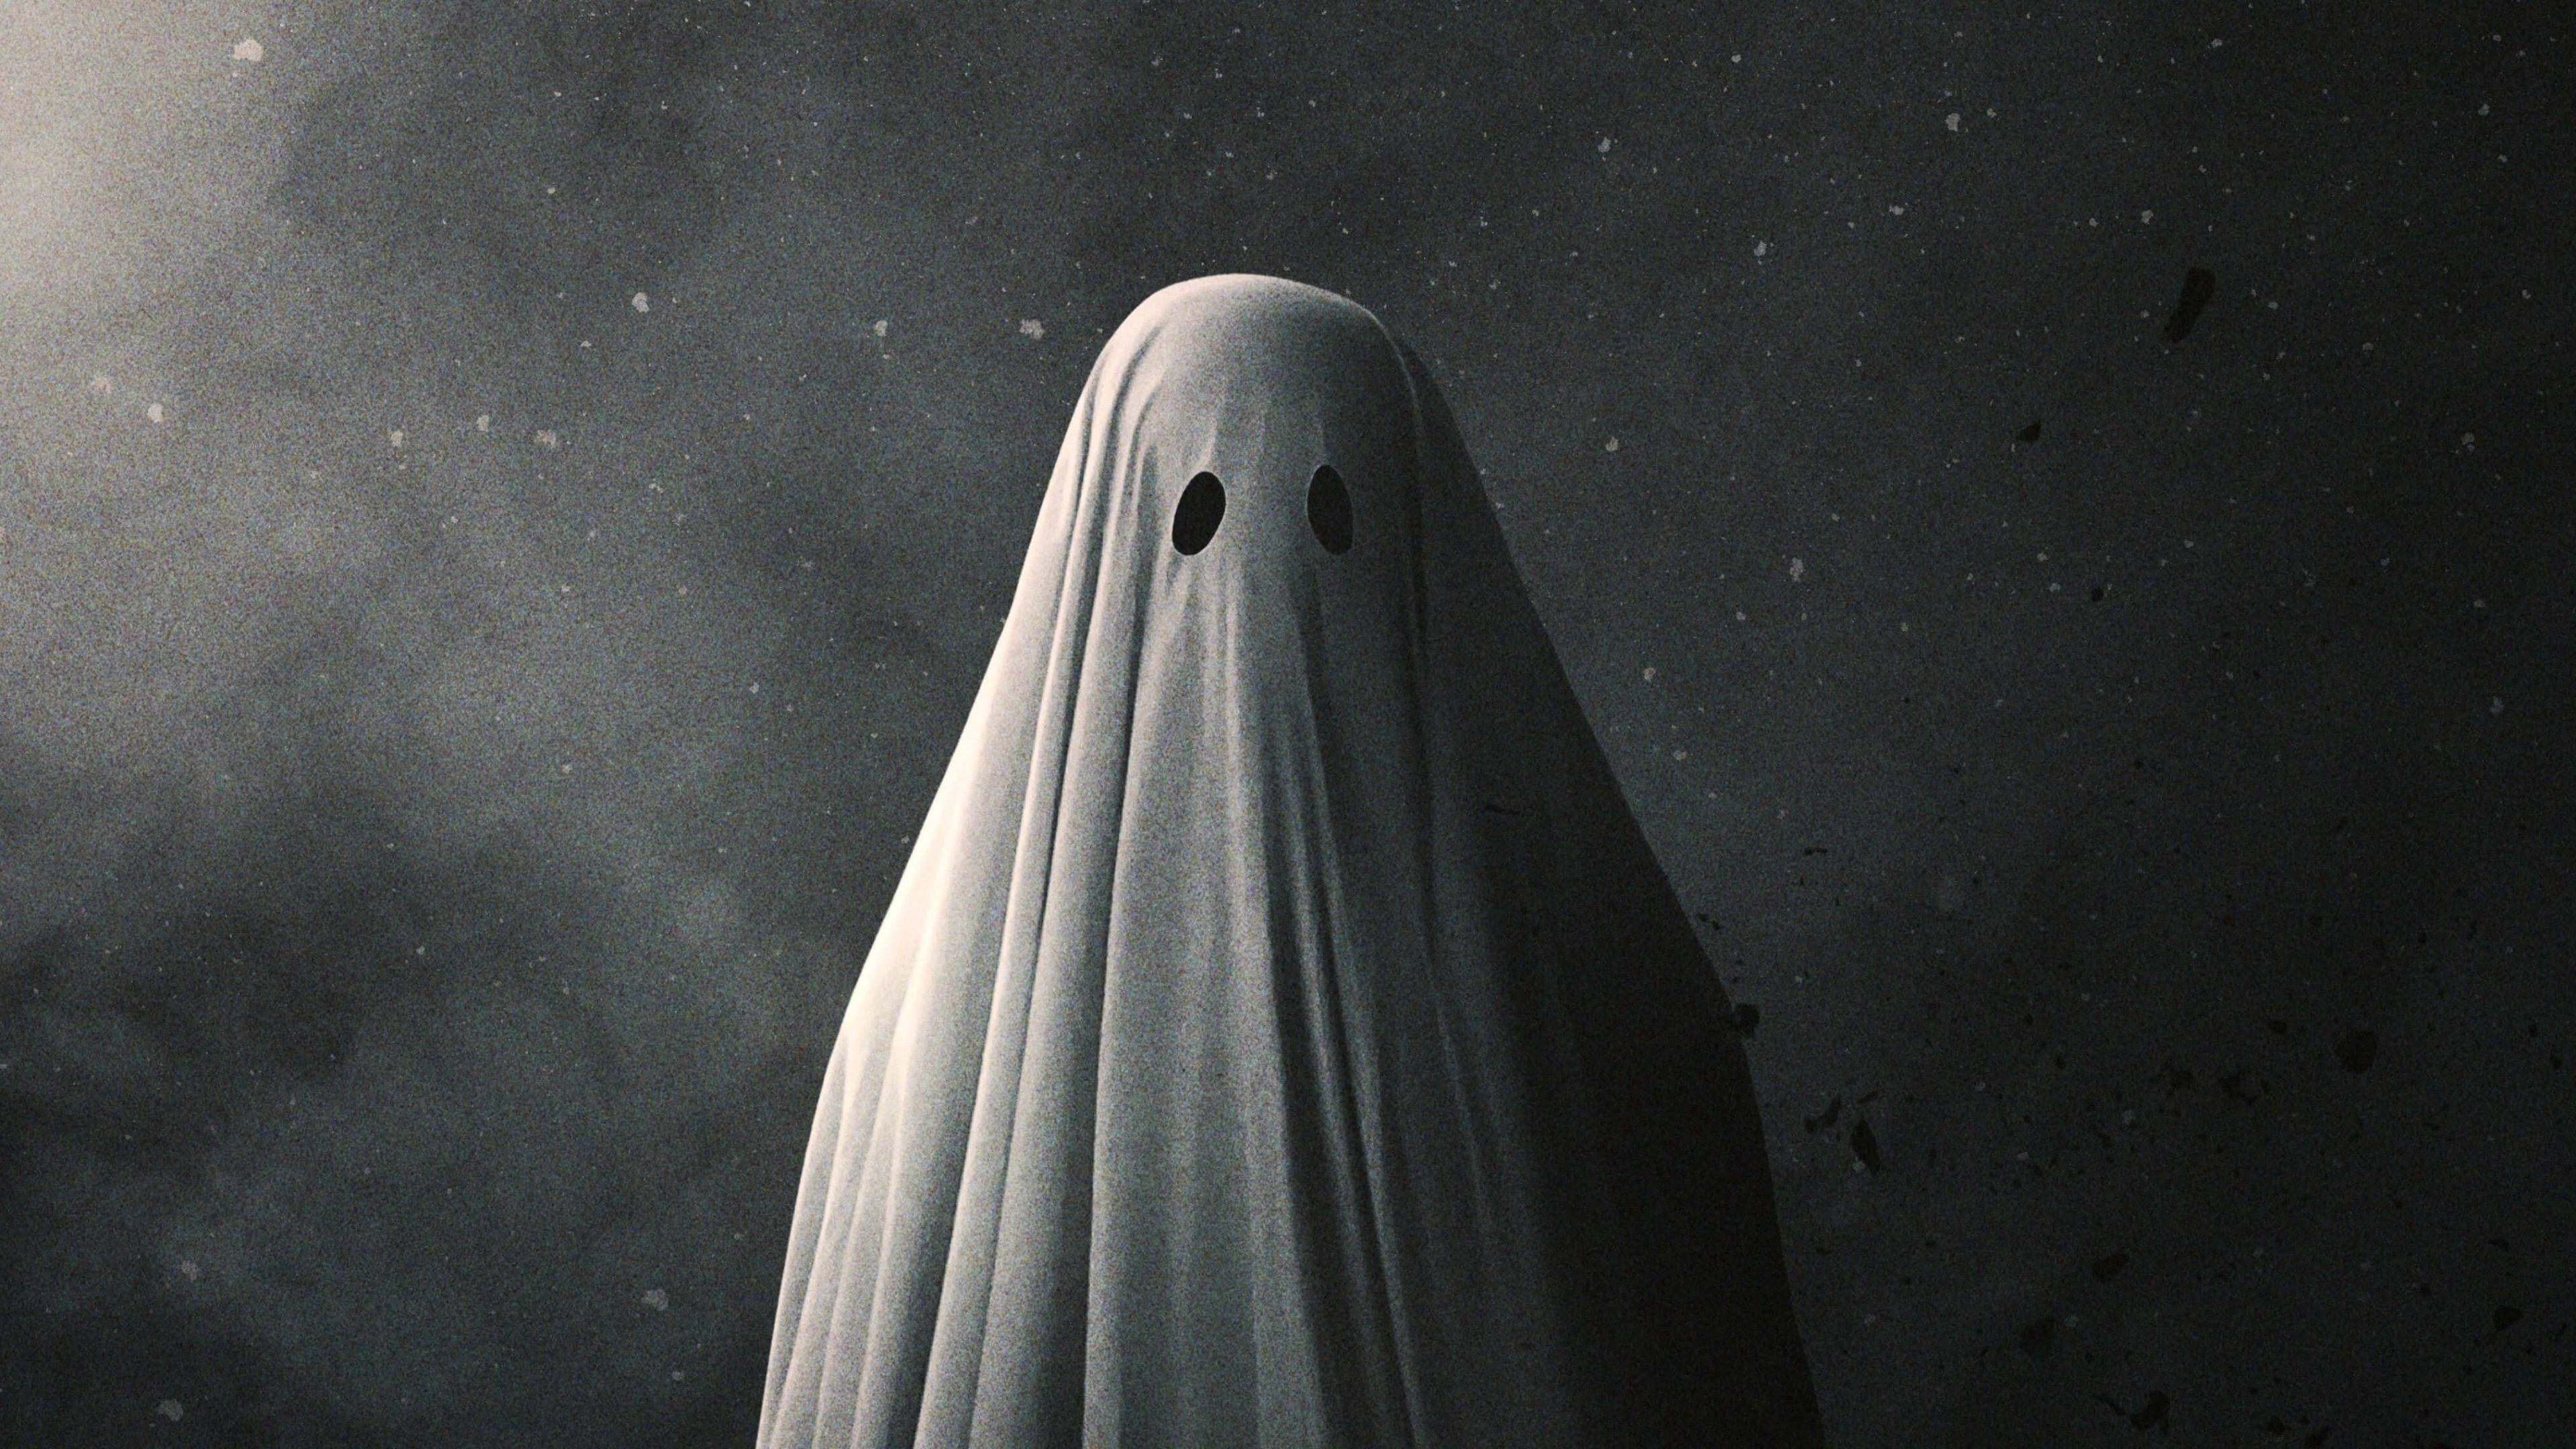 ghost video wallpaper download